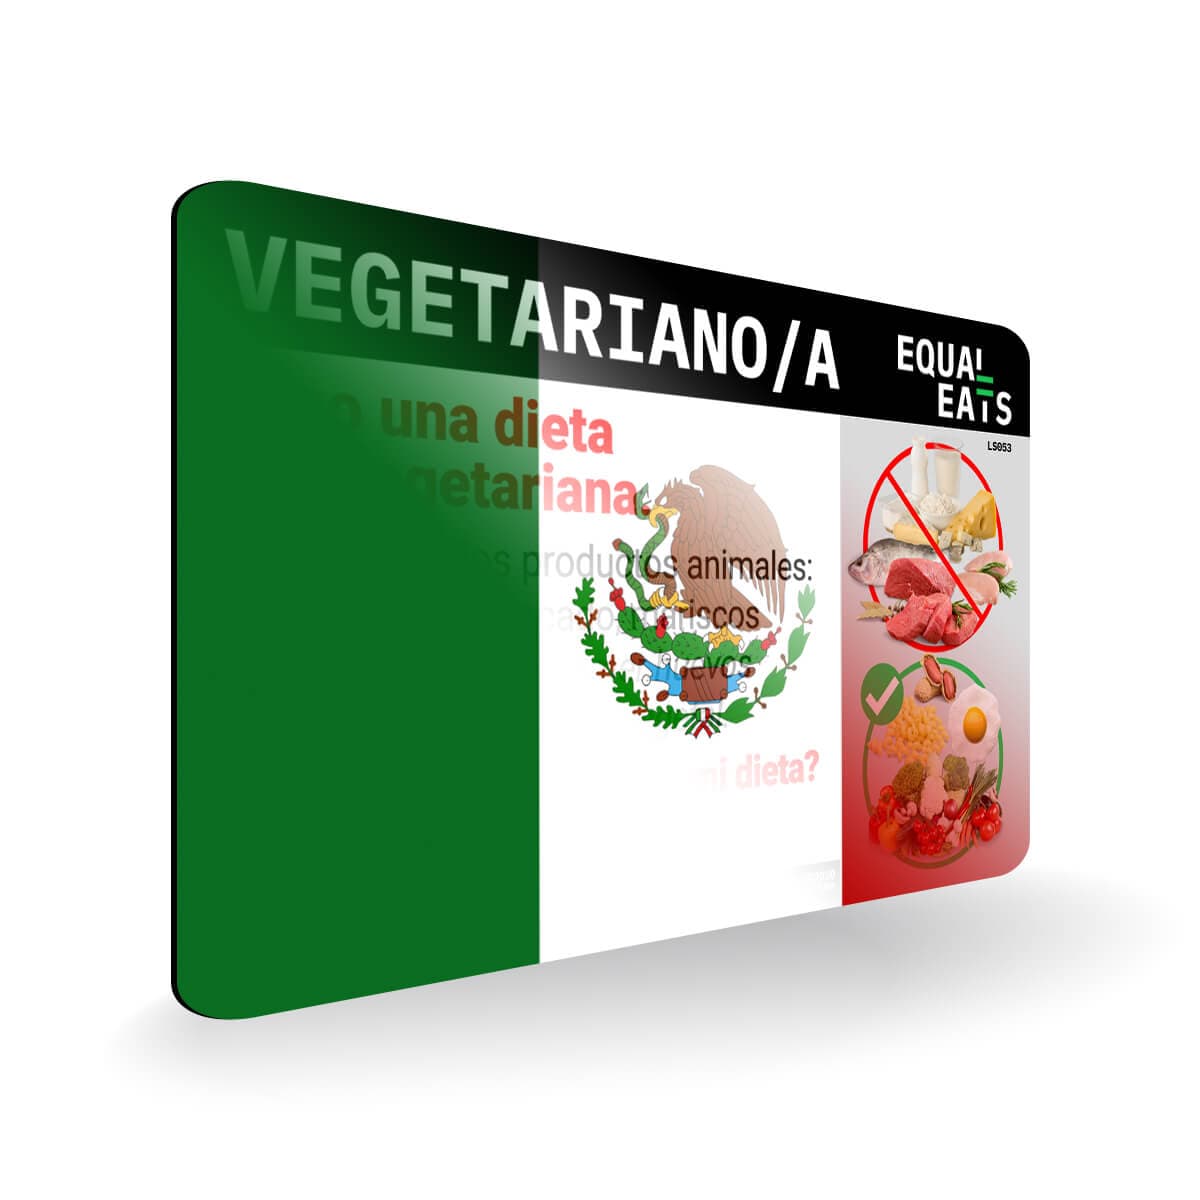 Ovo Vegetarian in Spanish. Card for Vegetarian in Latin America